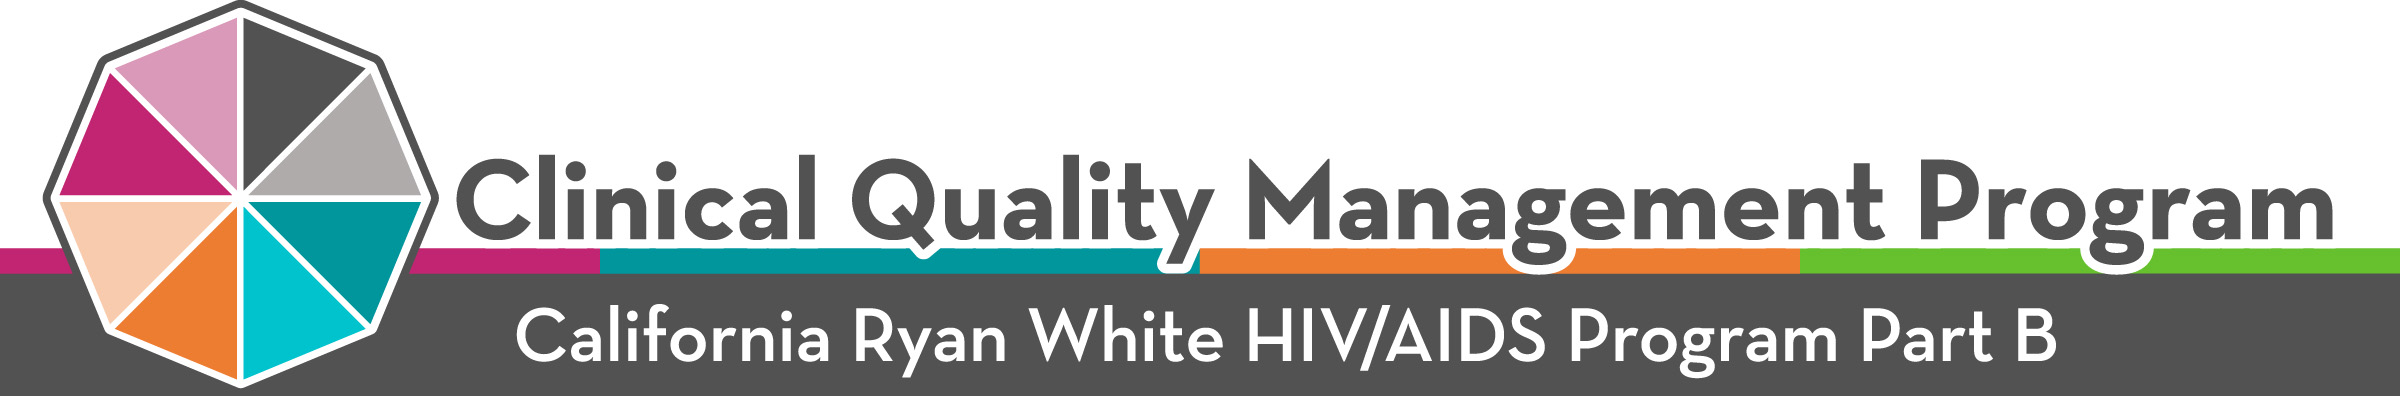 Clinical Quality Management Program - California Ryan White HIV/AIDS Program Part B